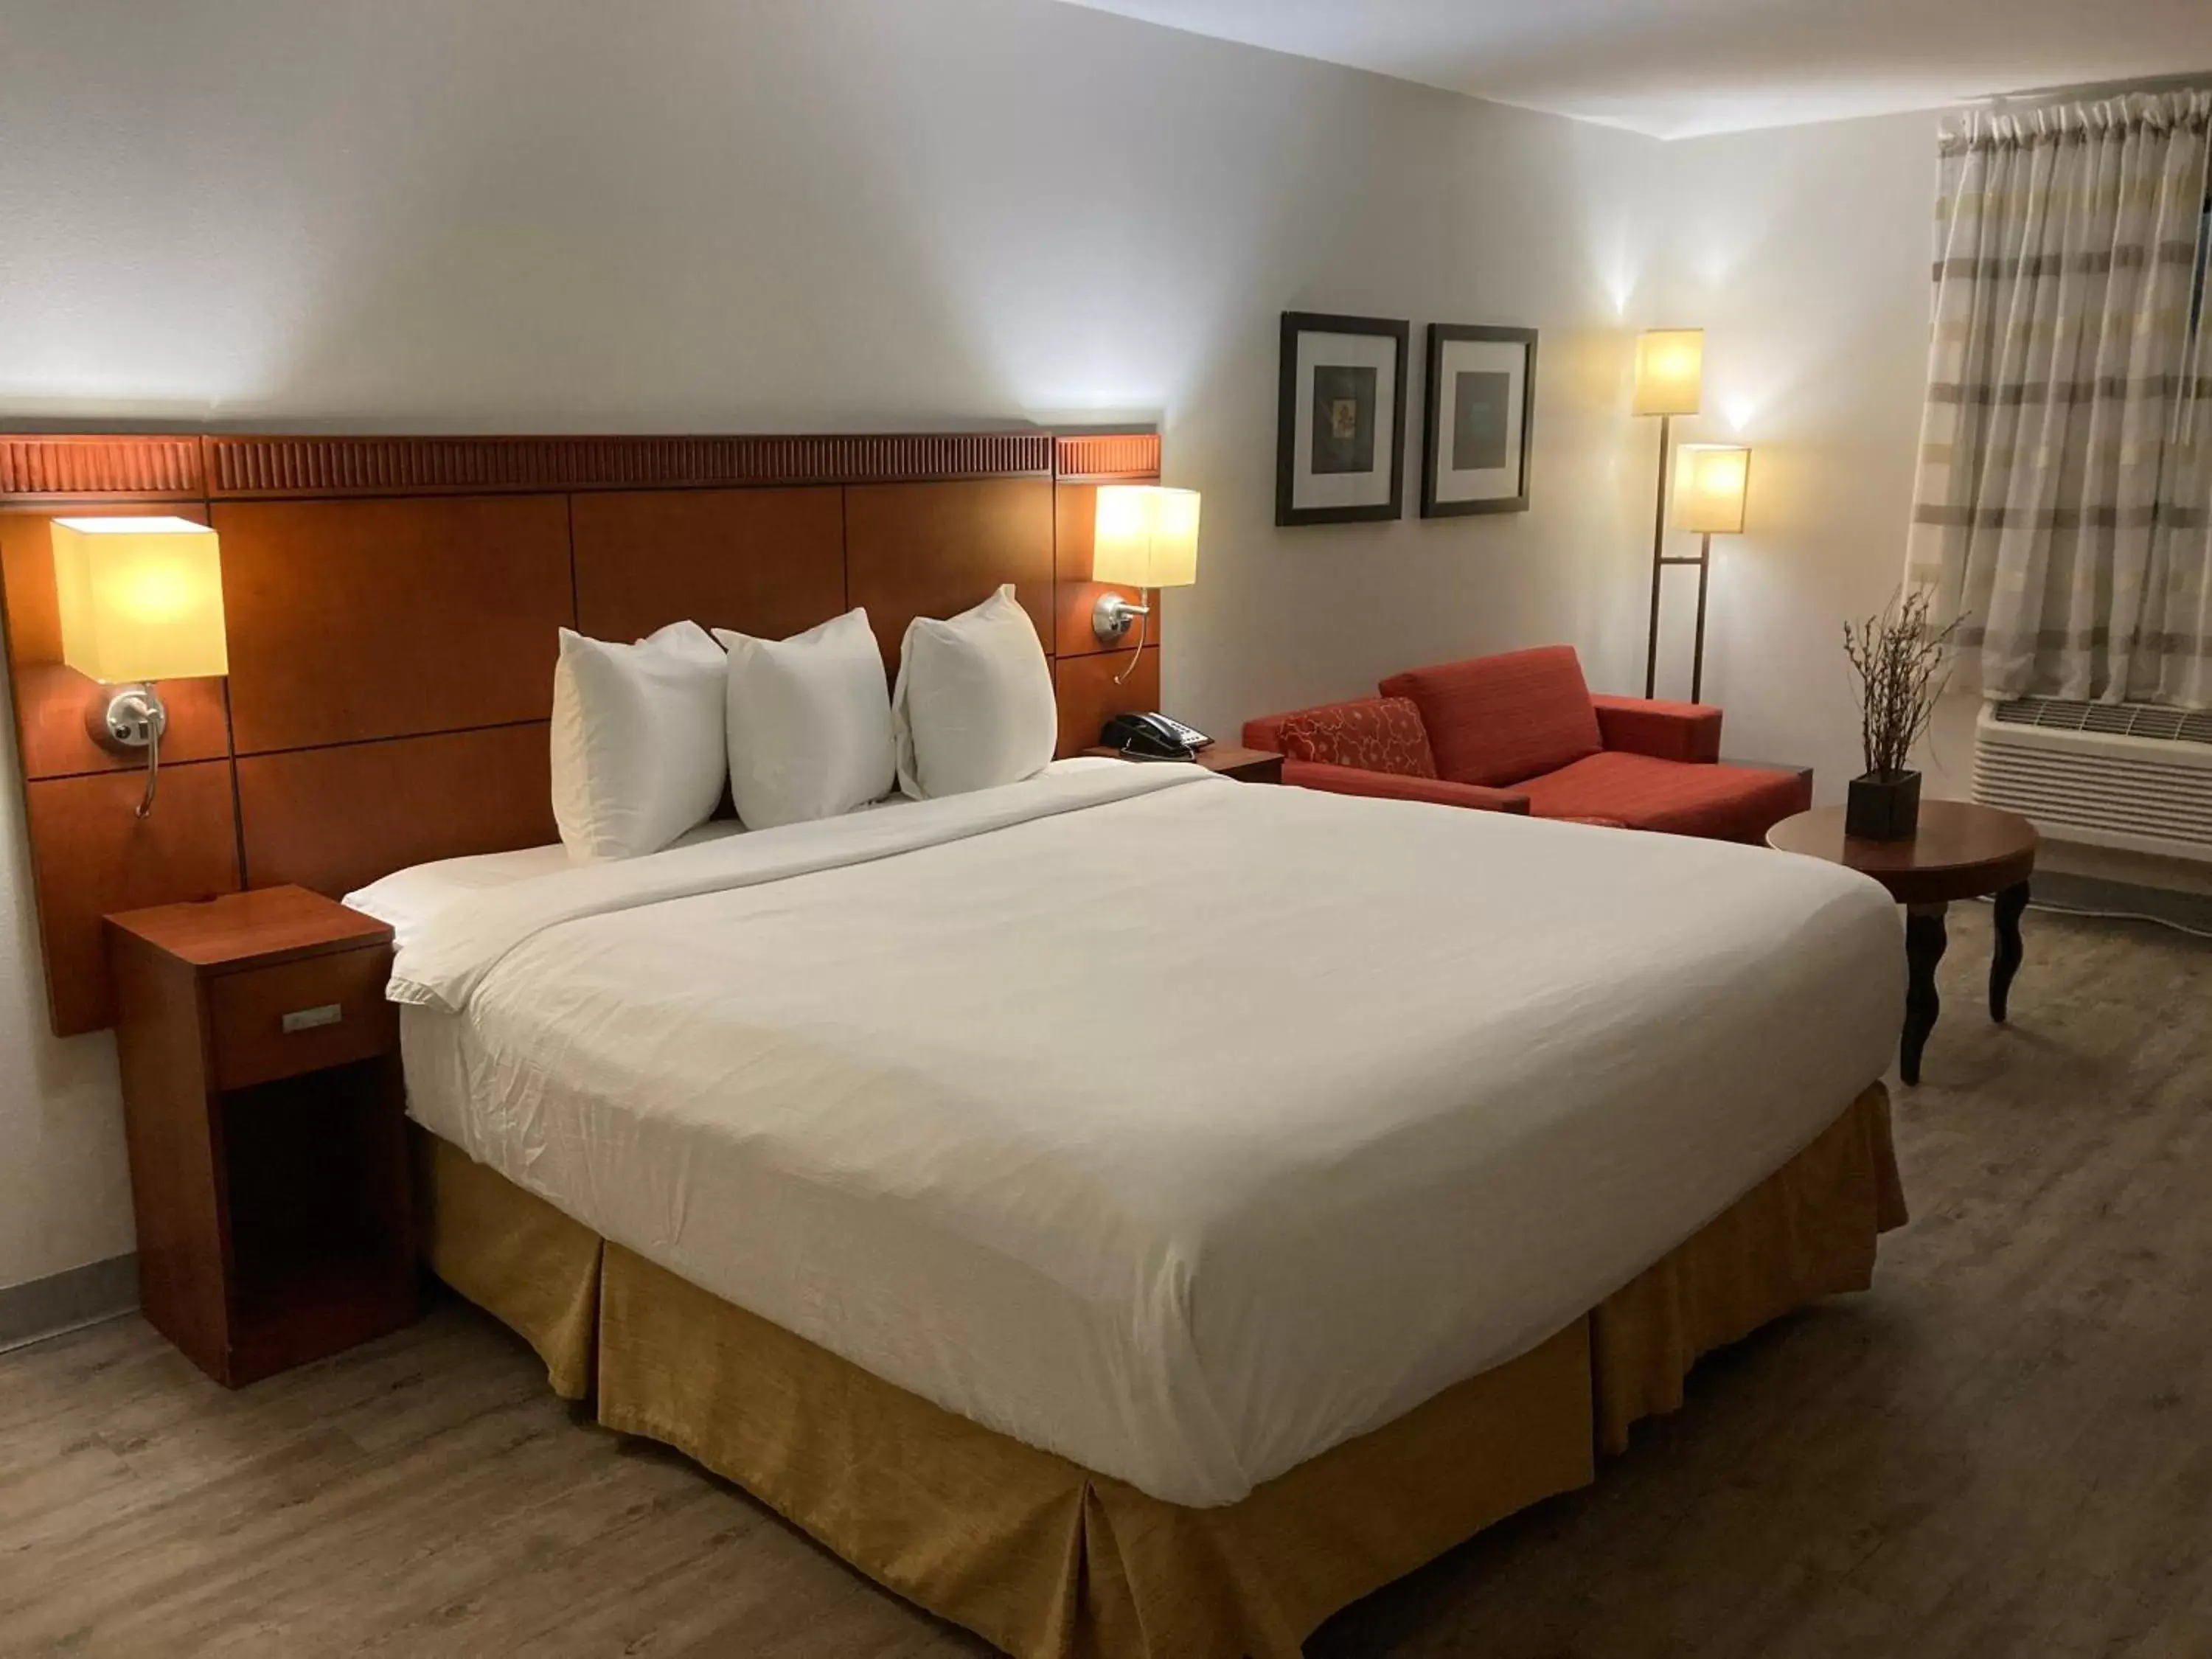 Bed in The Hotel Orange